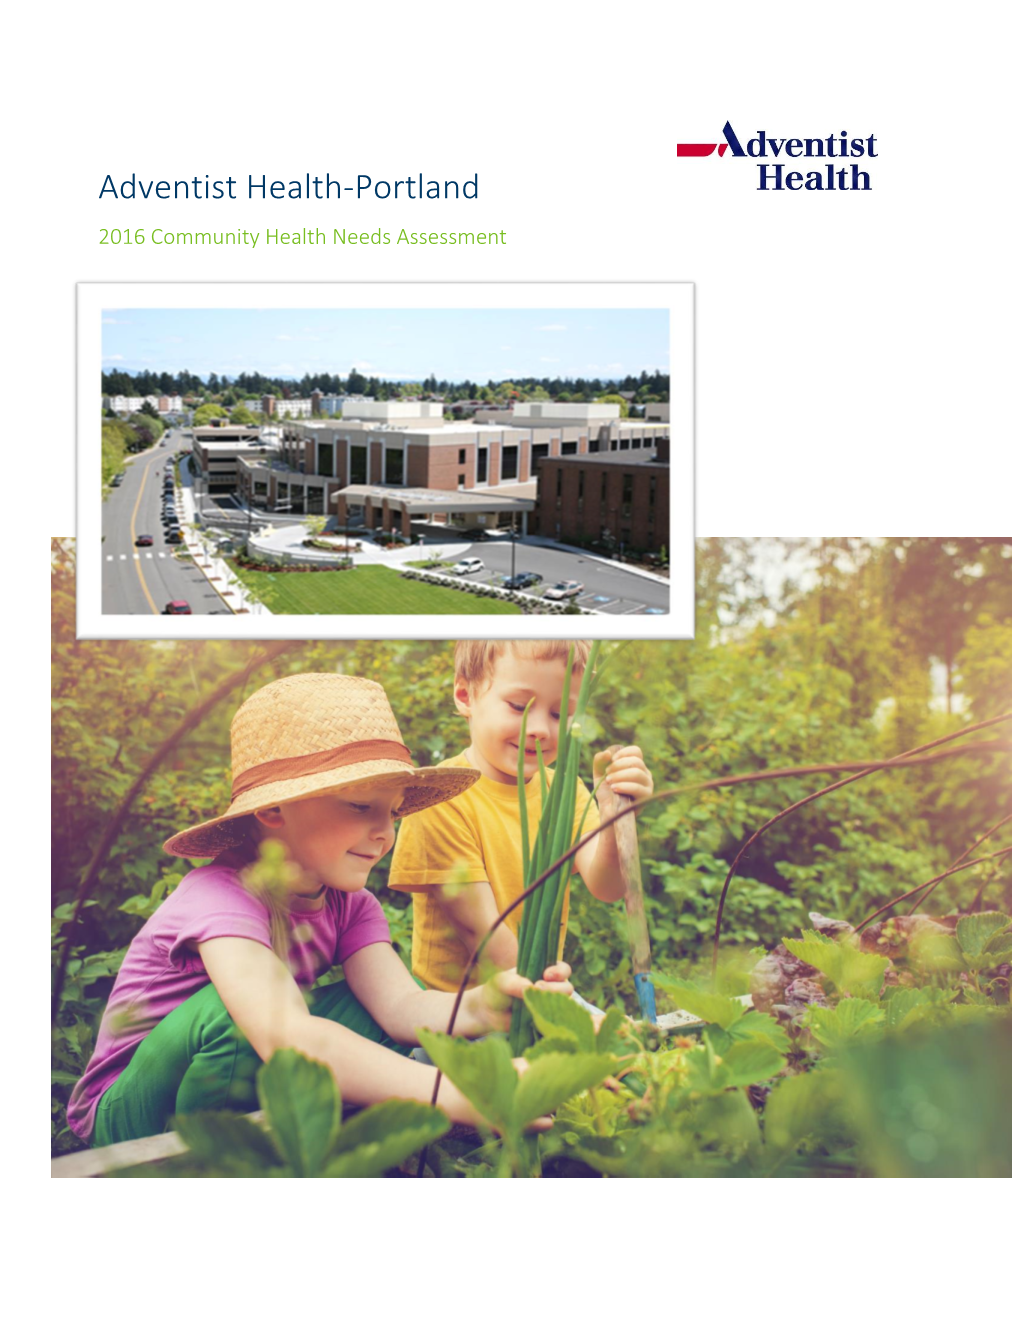 Adventist Health-Portland 2016 Community Health Needs Assessment Executive Summary